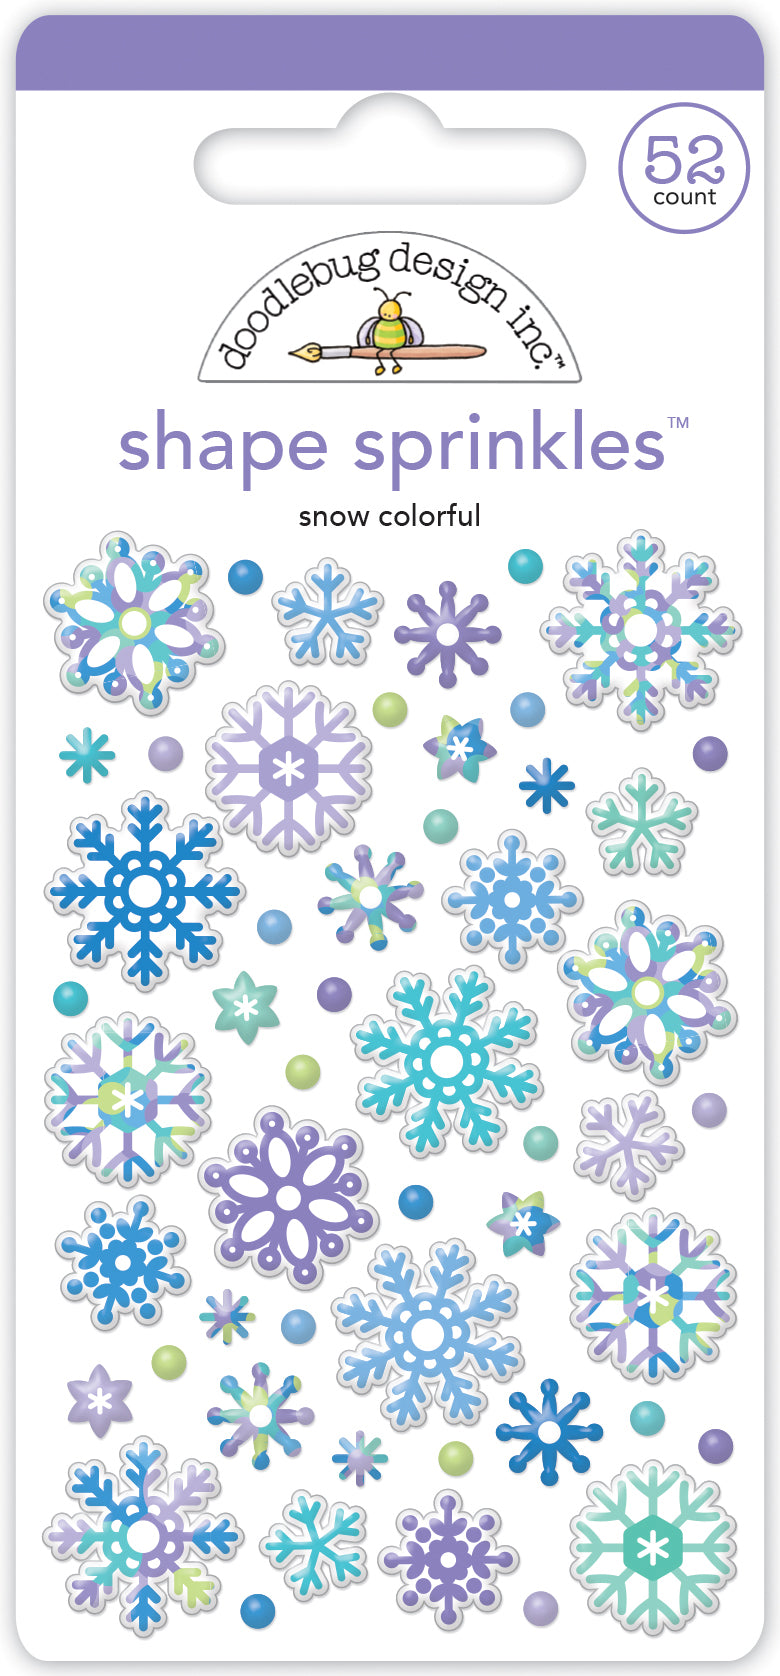 Snow Colorful Shape Sprinkles